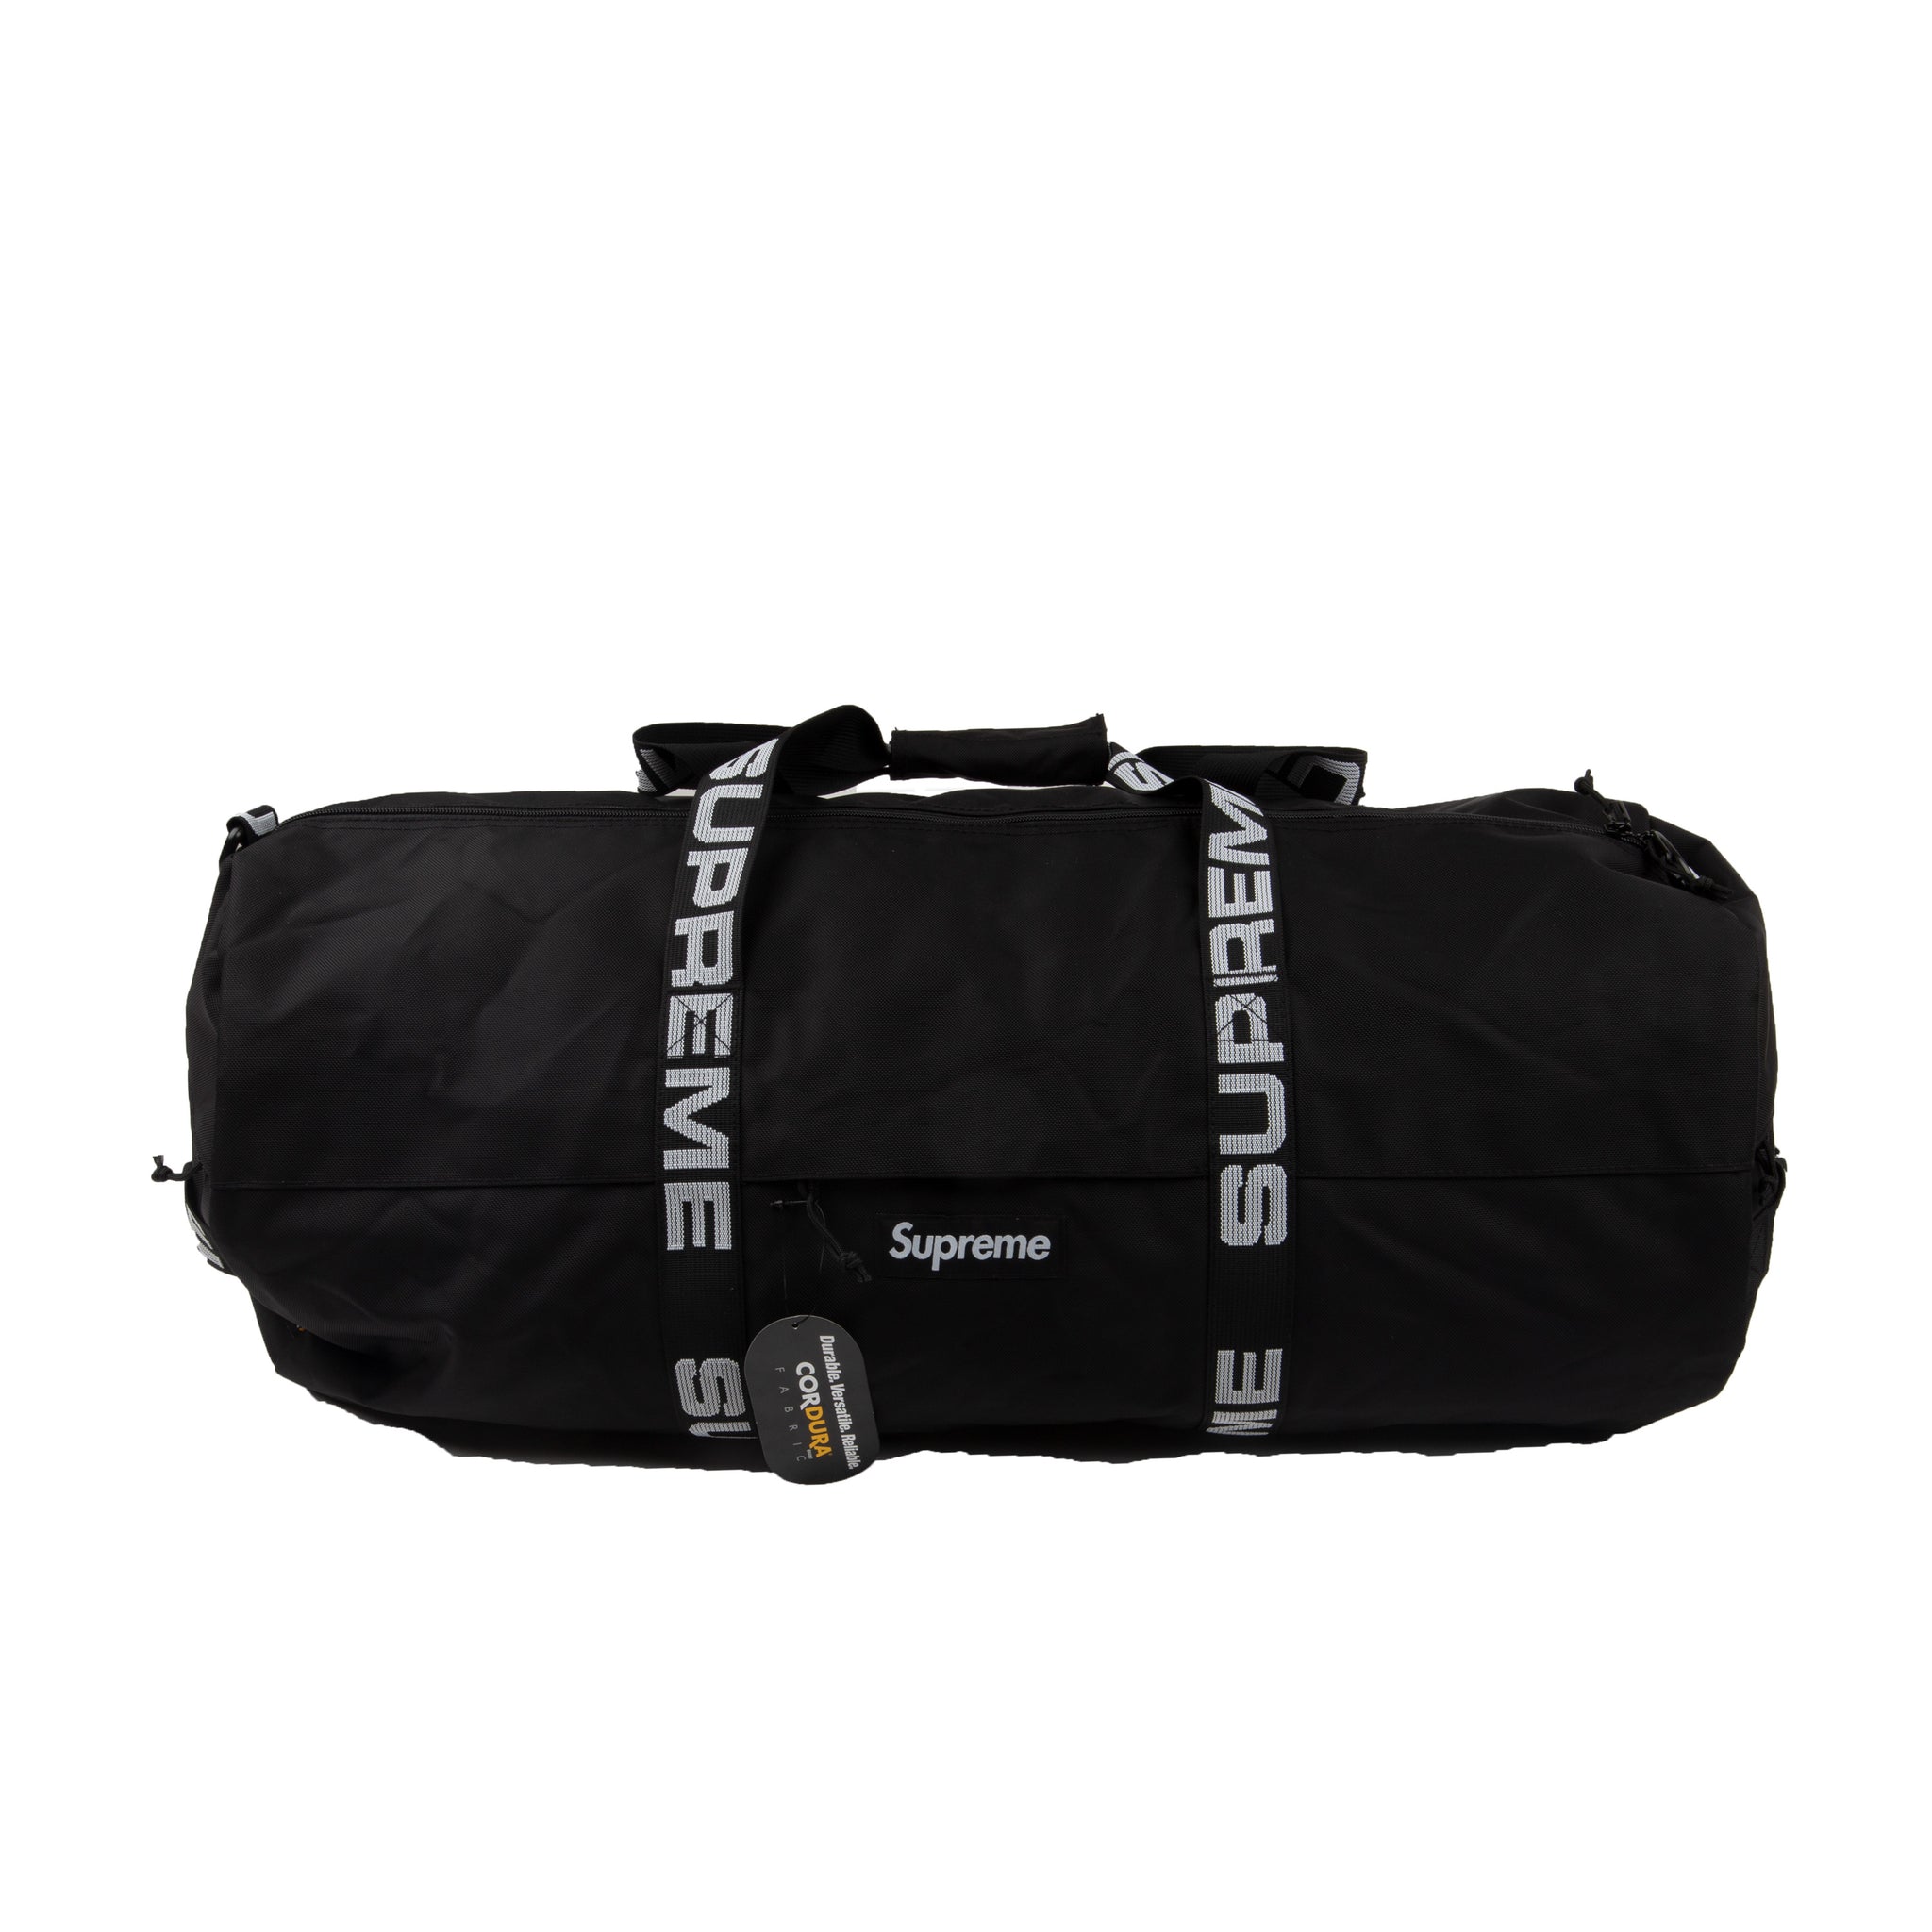 Supreme Black SS18 Large Duffle Bag